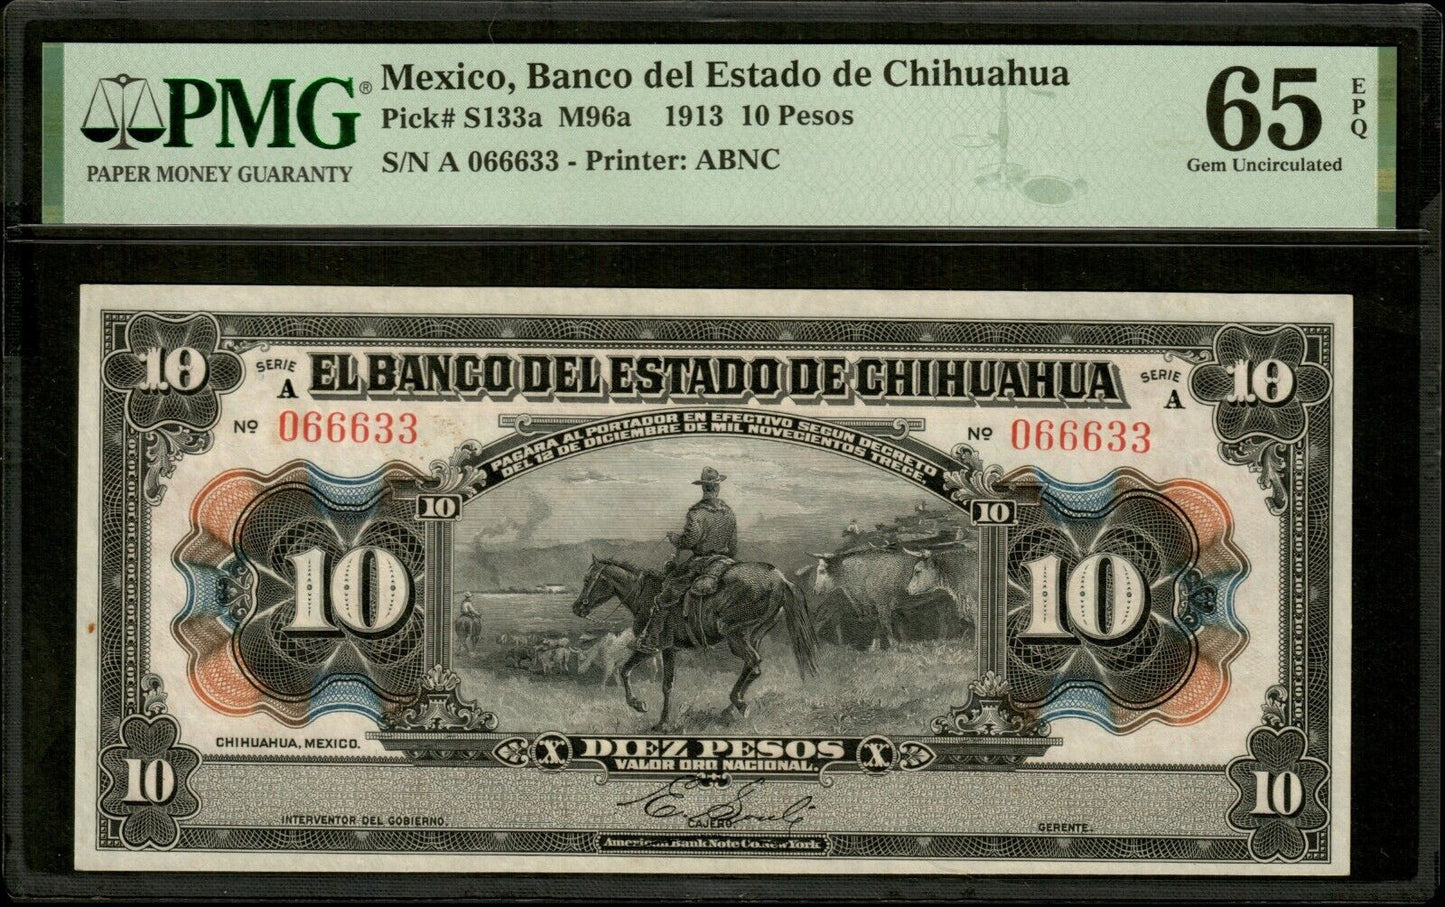 MEXICO - 10 Pesos (1913) A 066633, Chihuahua, P.S133a NEUF / PMG Gem Unc 65 EPQ